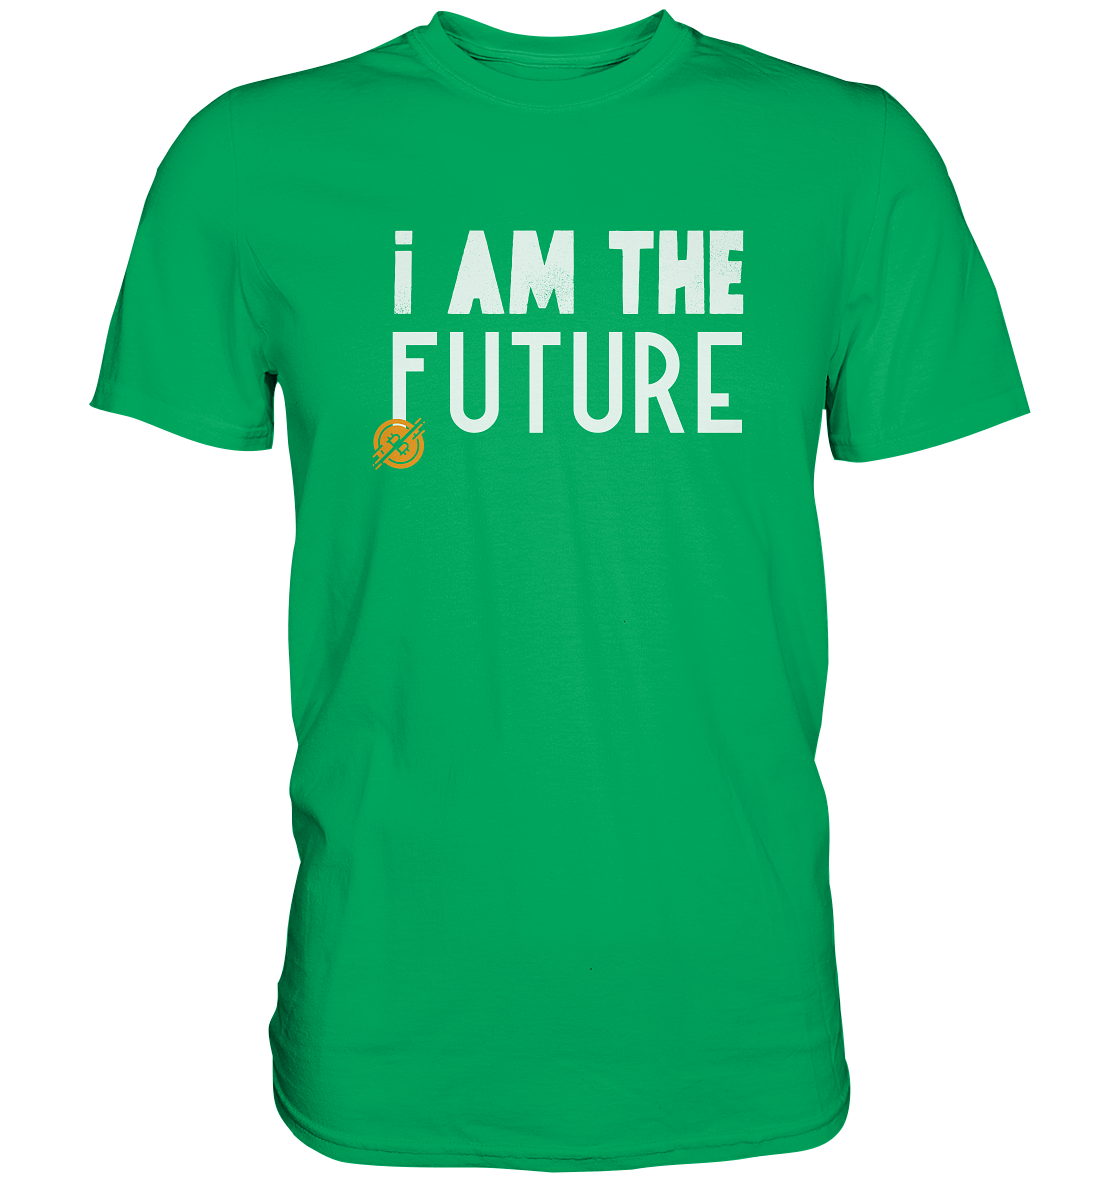 Bitcoin T-Shirt "I am the future" - Premium T-Shirt